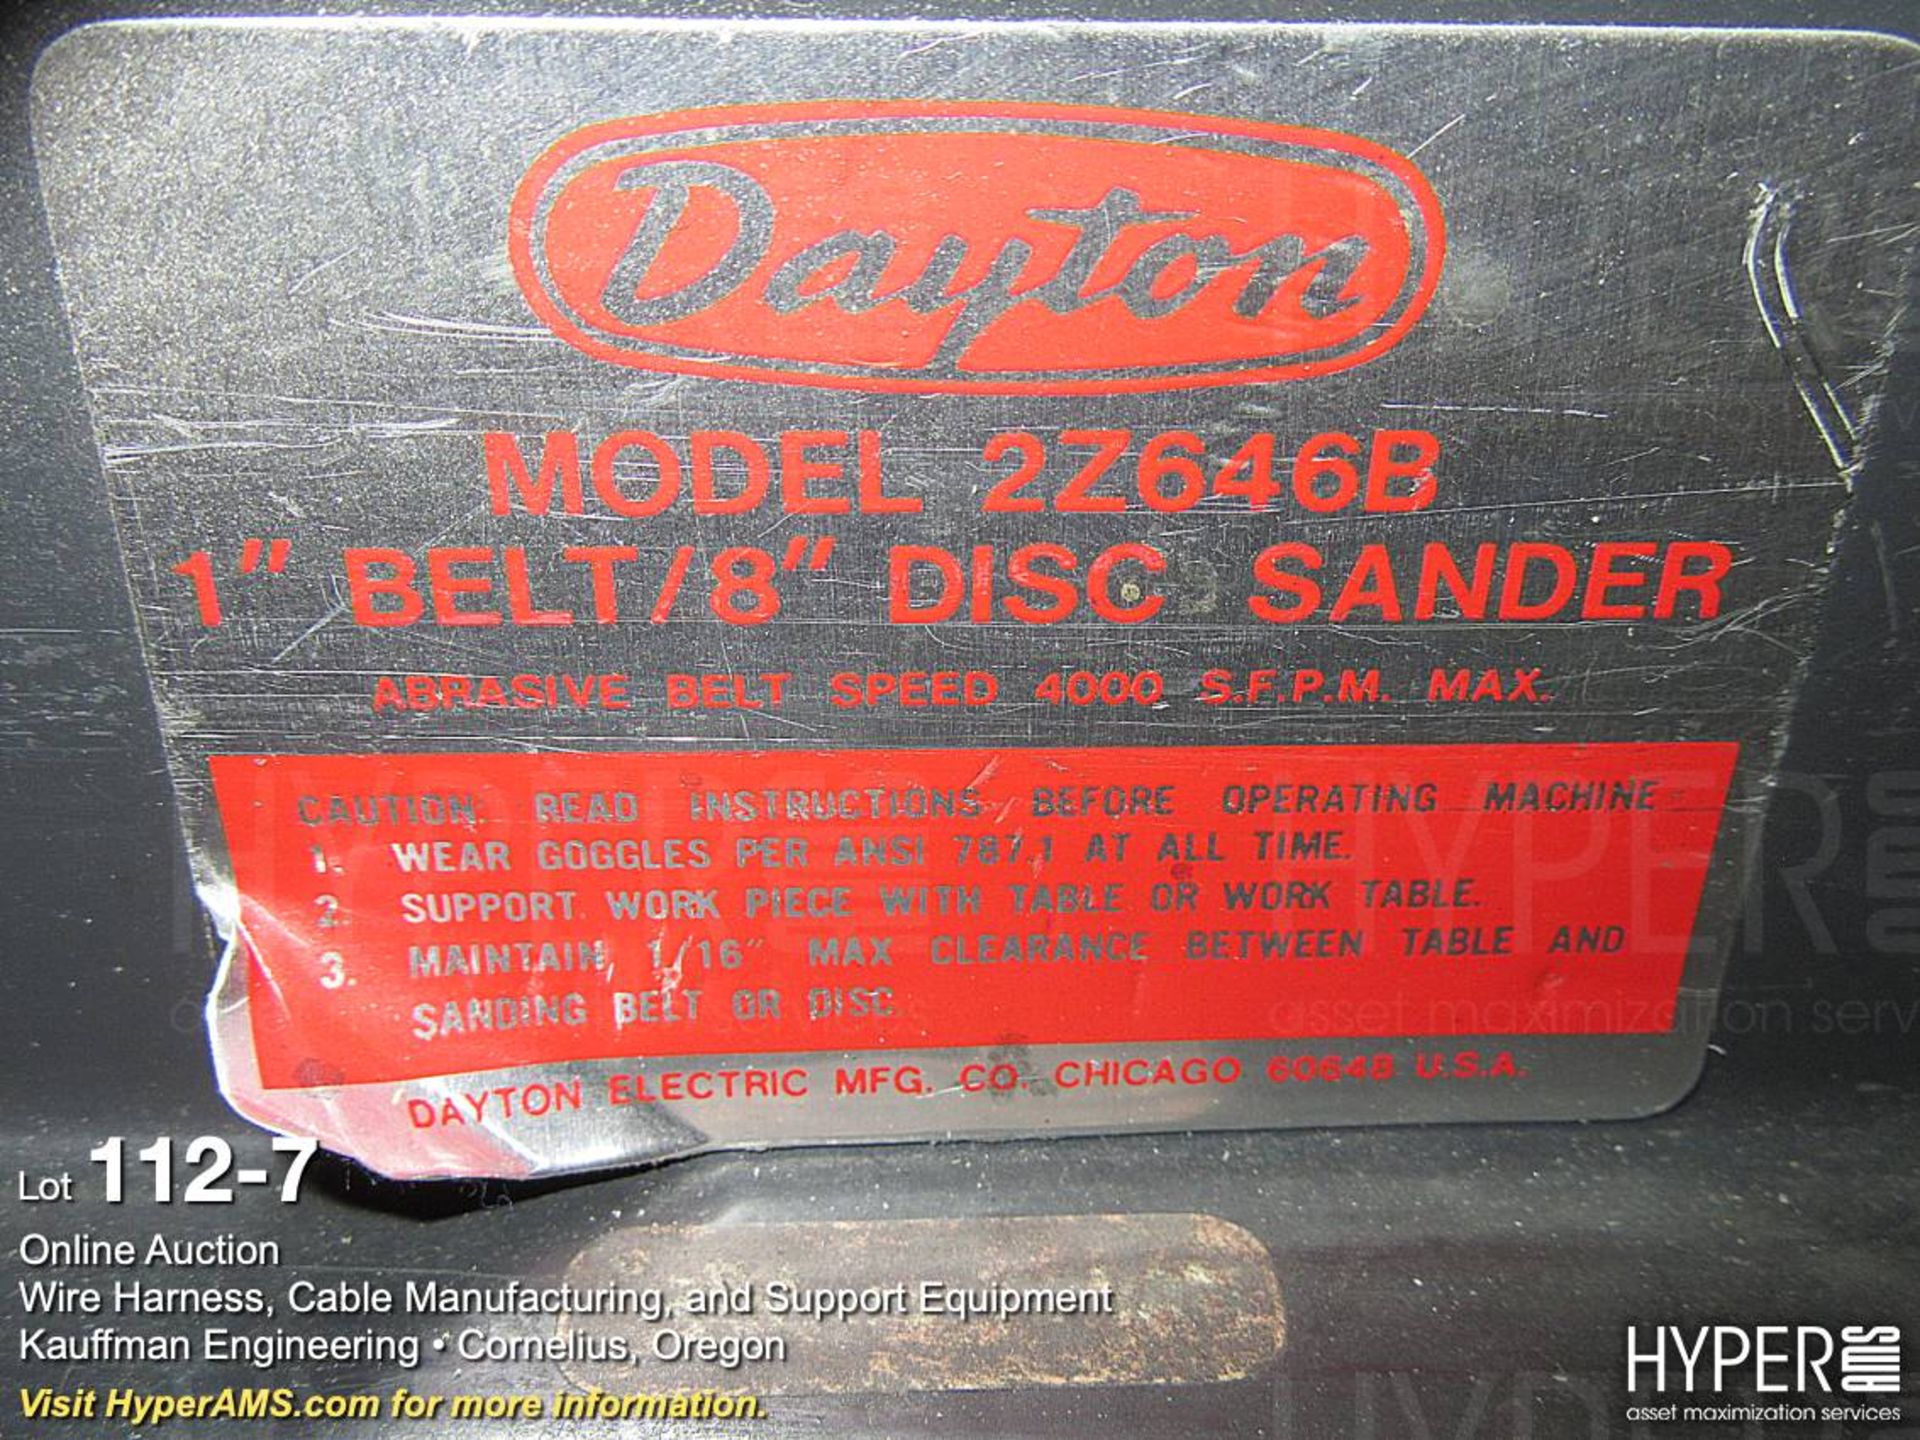 Dayton 2Z646B combination disk sander & pedestal wire twister - Image 7 of 7